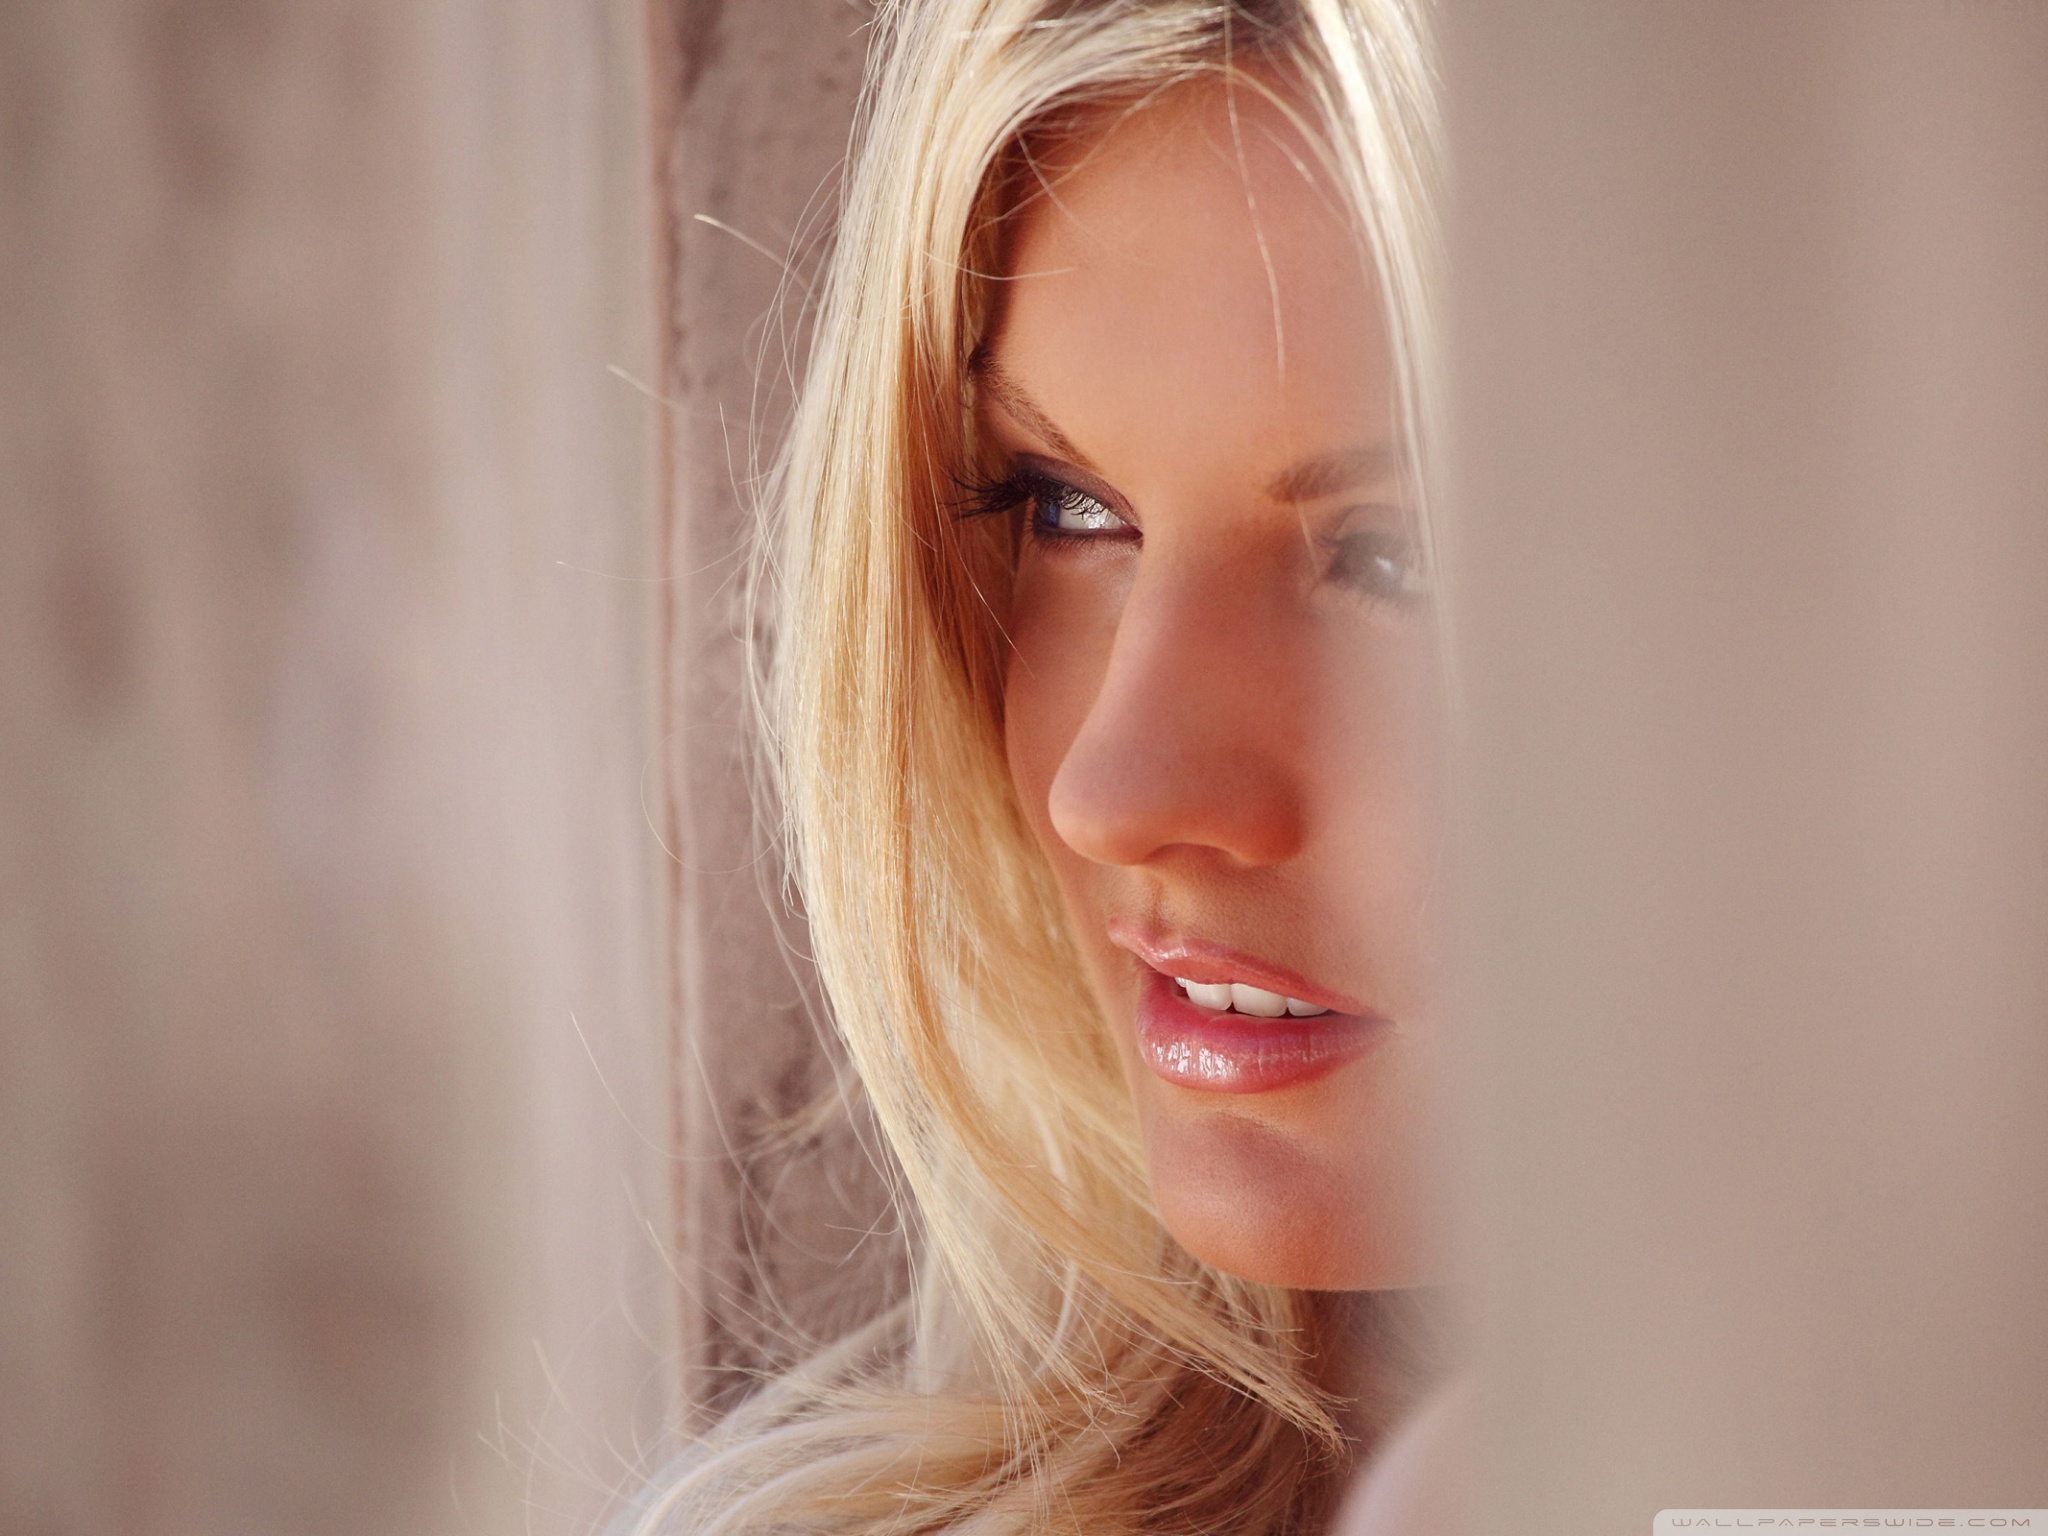 Beautiful Blonde Woman Ultra HD Desktop Background Wallpaper for 4K UHD TV, Tablet